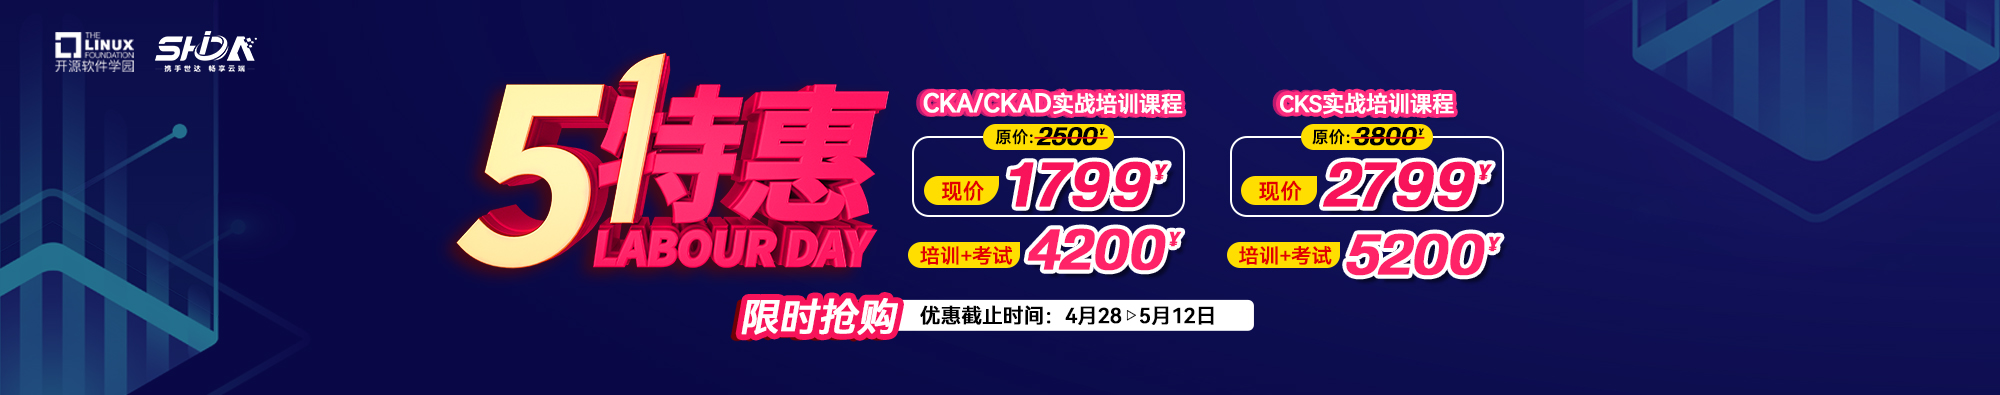 CKA-CKAD-banner.jpg